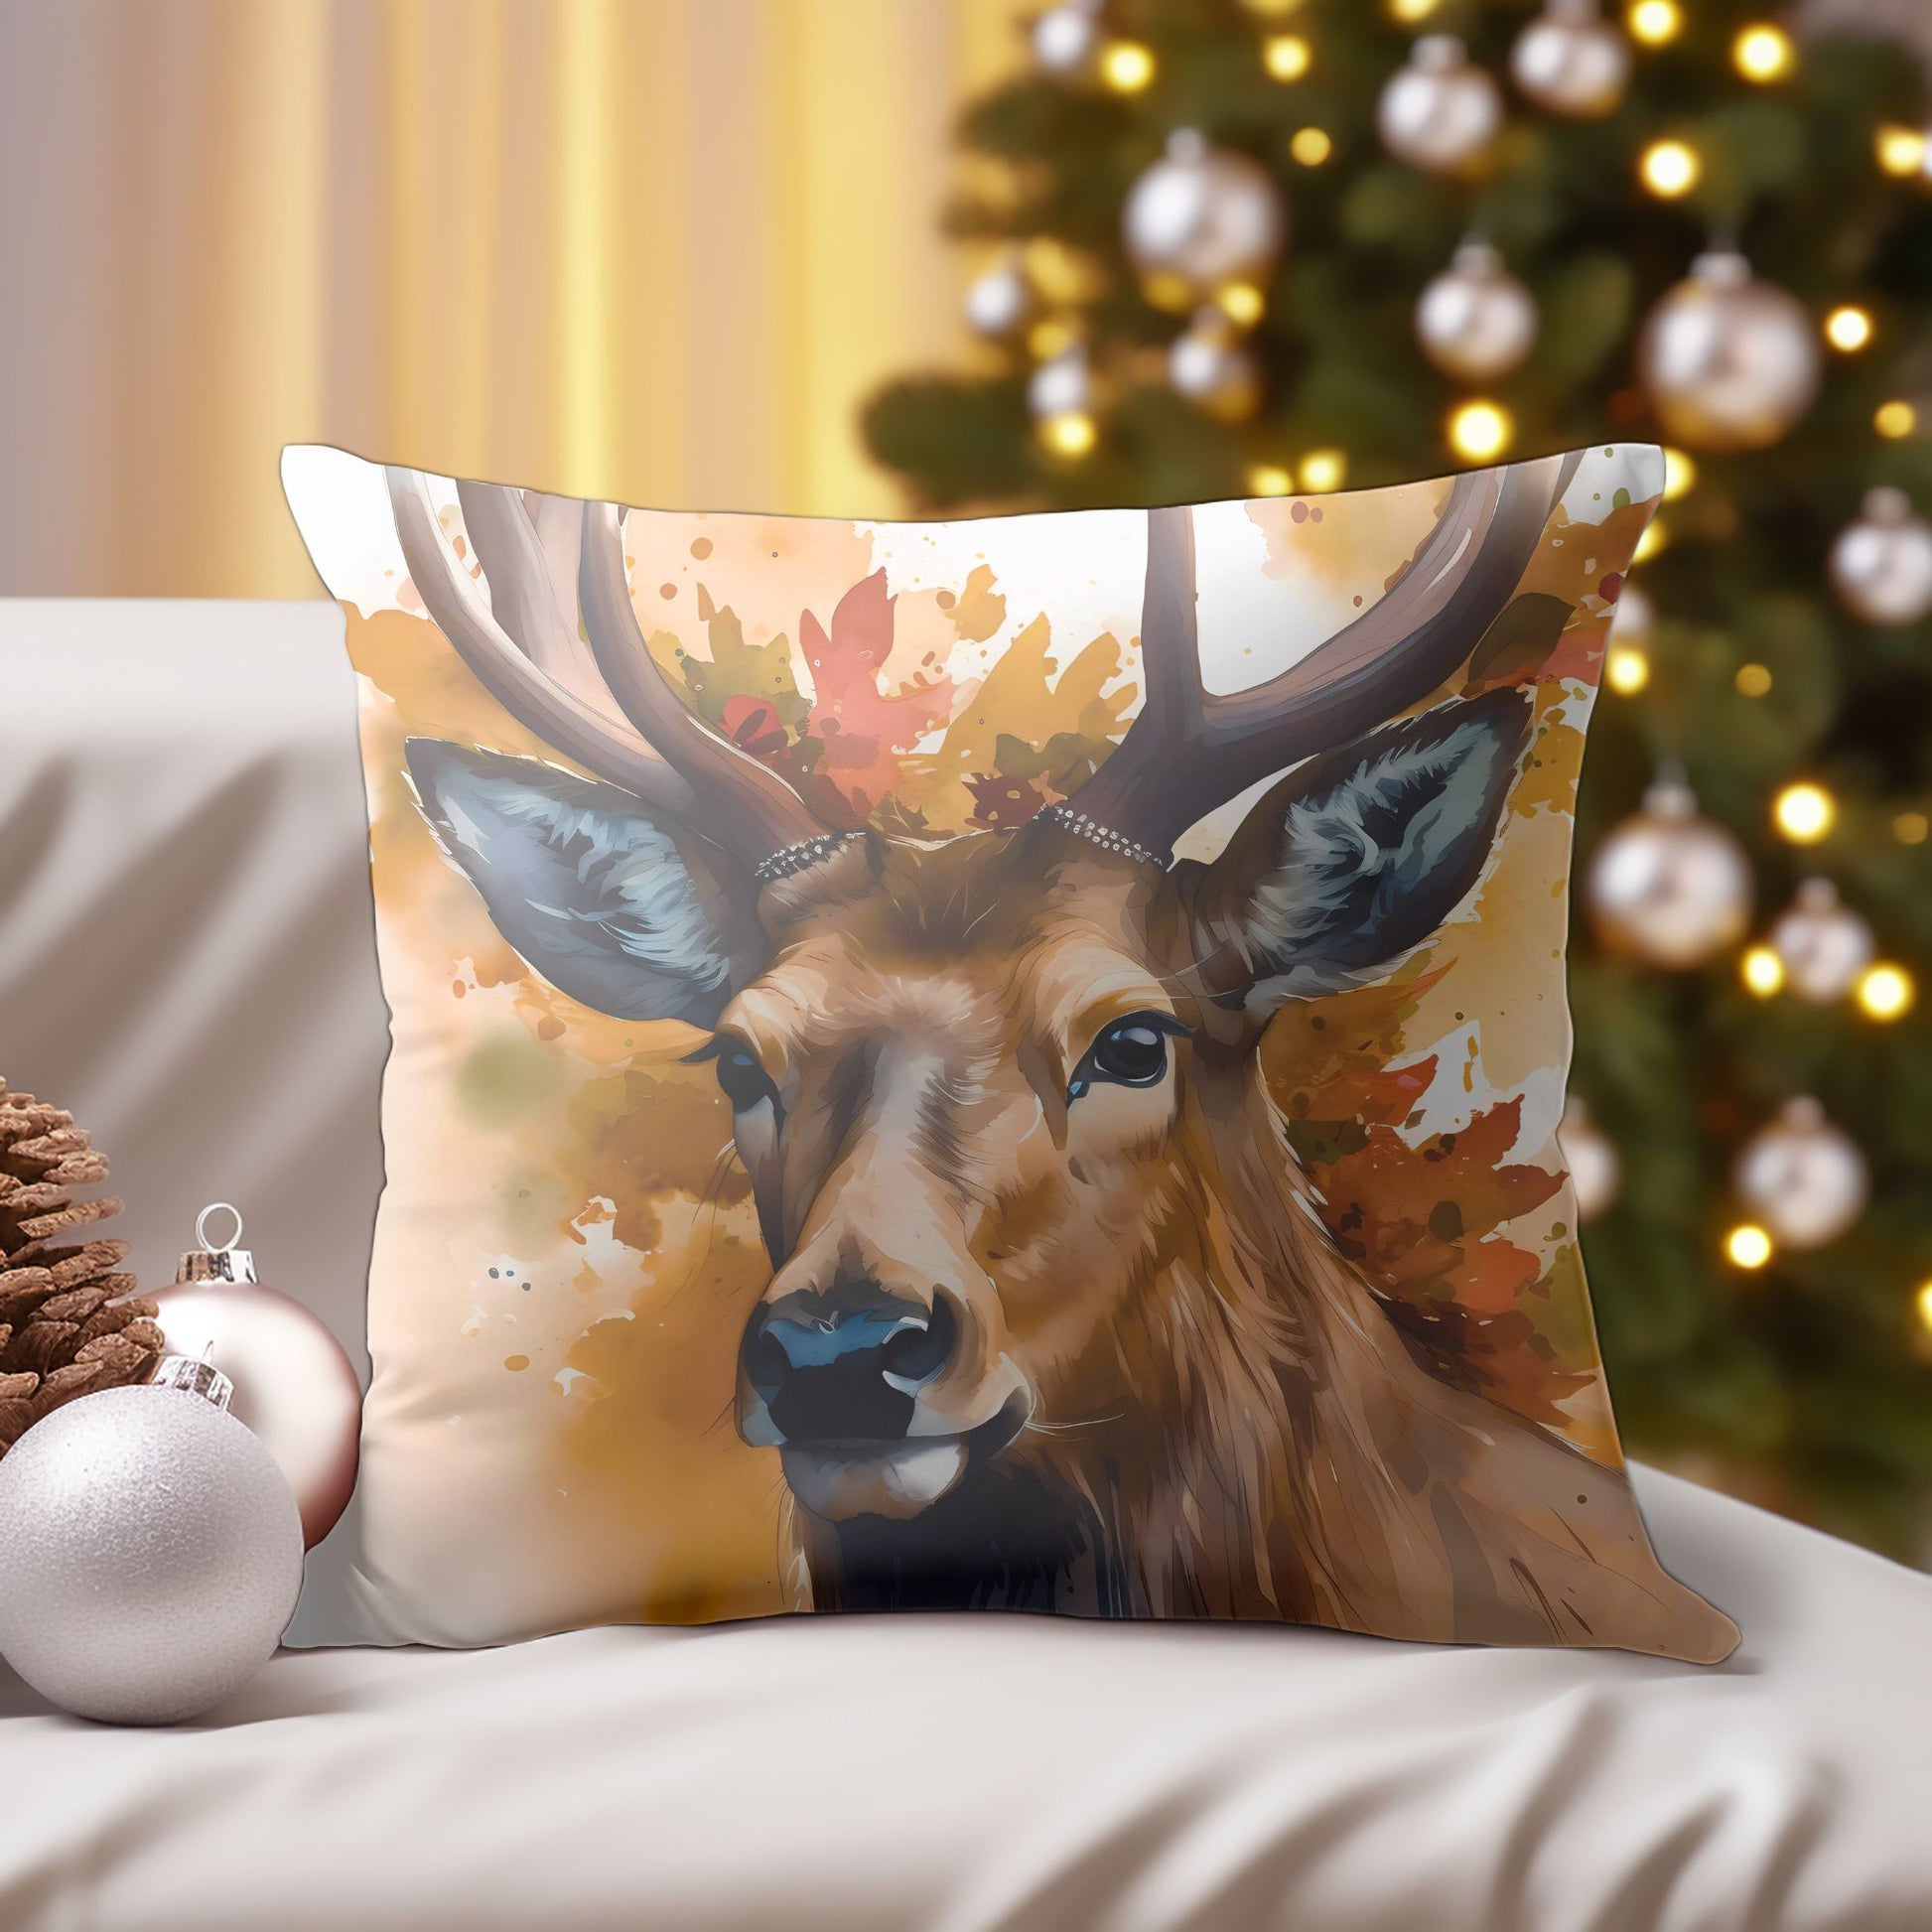 Christmas Theme Pillow for a Cozy Seasonal Decor